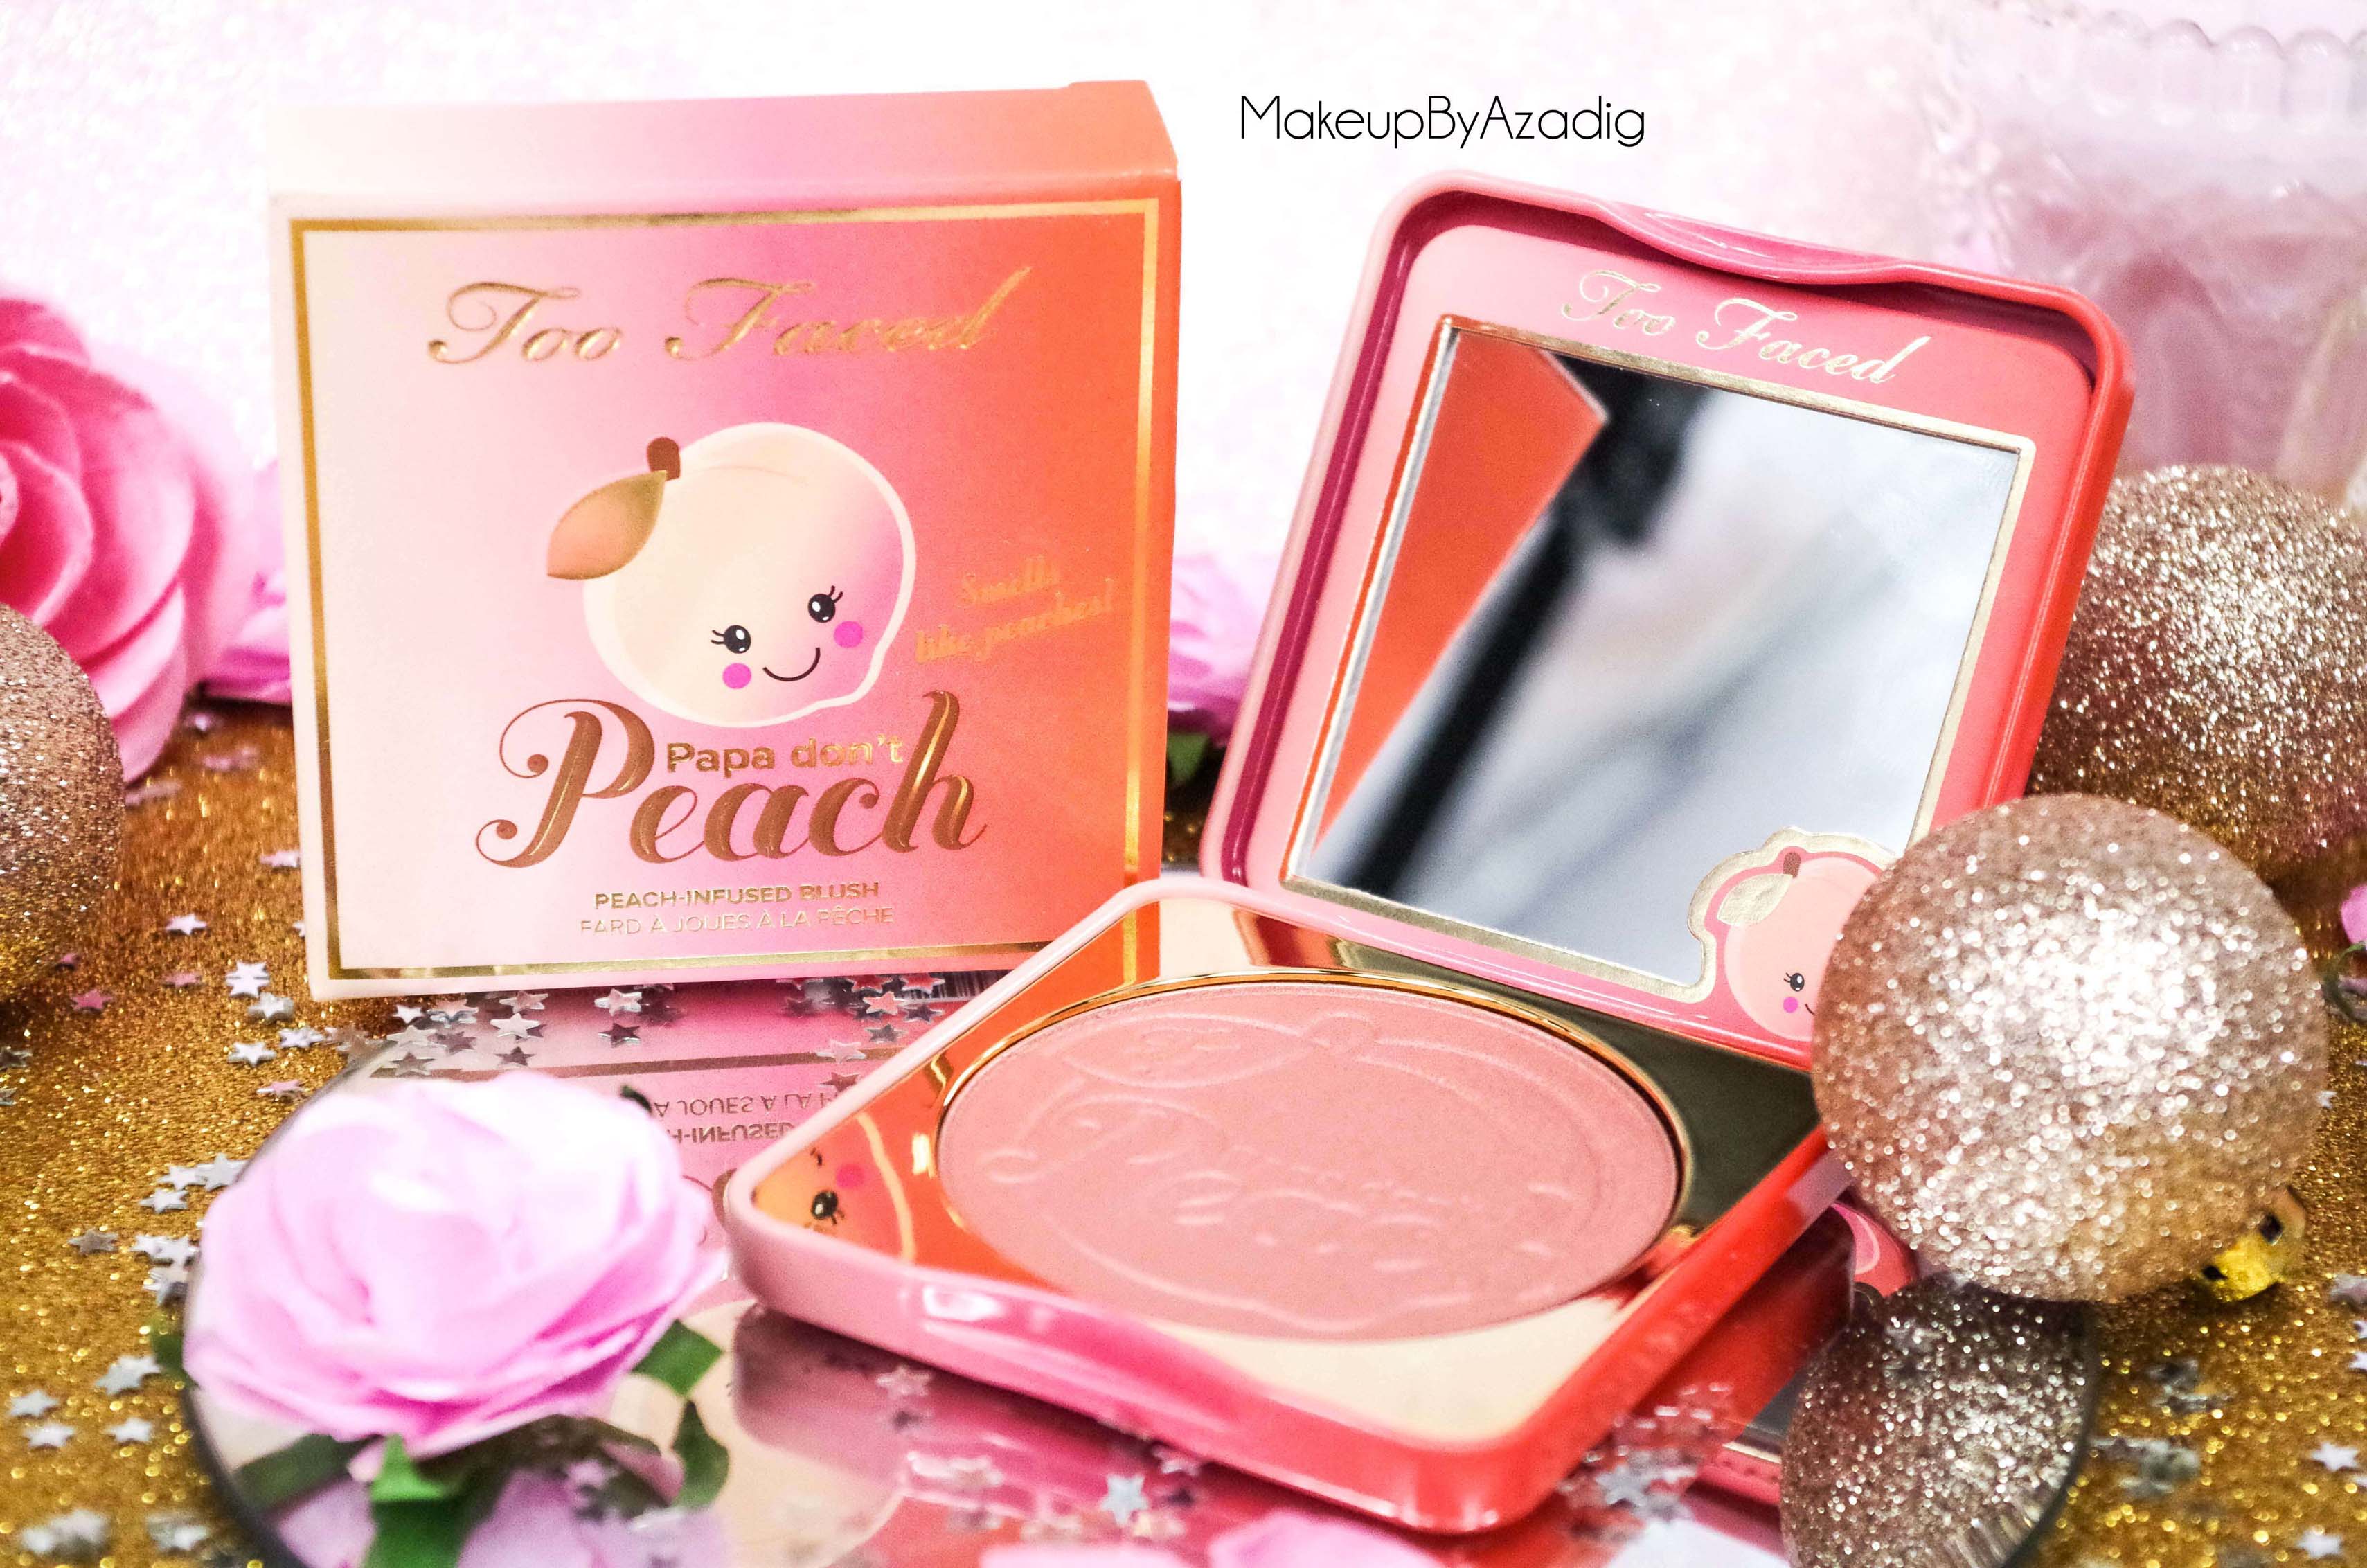 review-nouveau-blush-papa-dont-peach-too-faced-sephora-ete-printemps-paris-sweet-peach-swatch-avis-makeupbyazadig-troyes-2